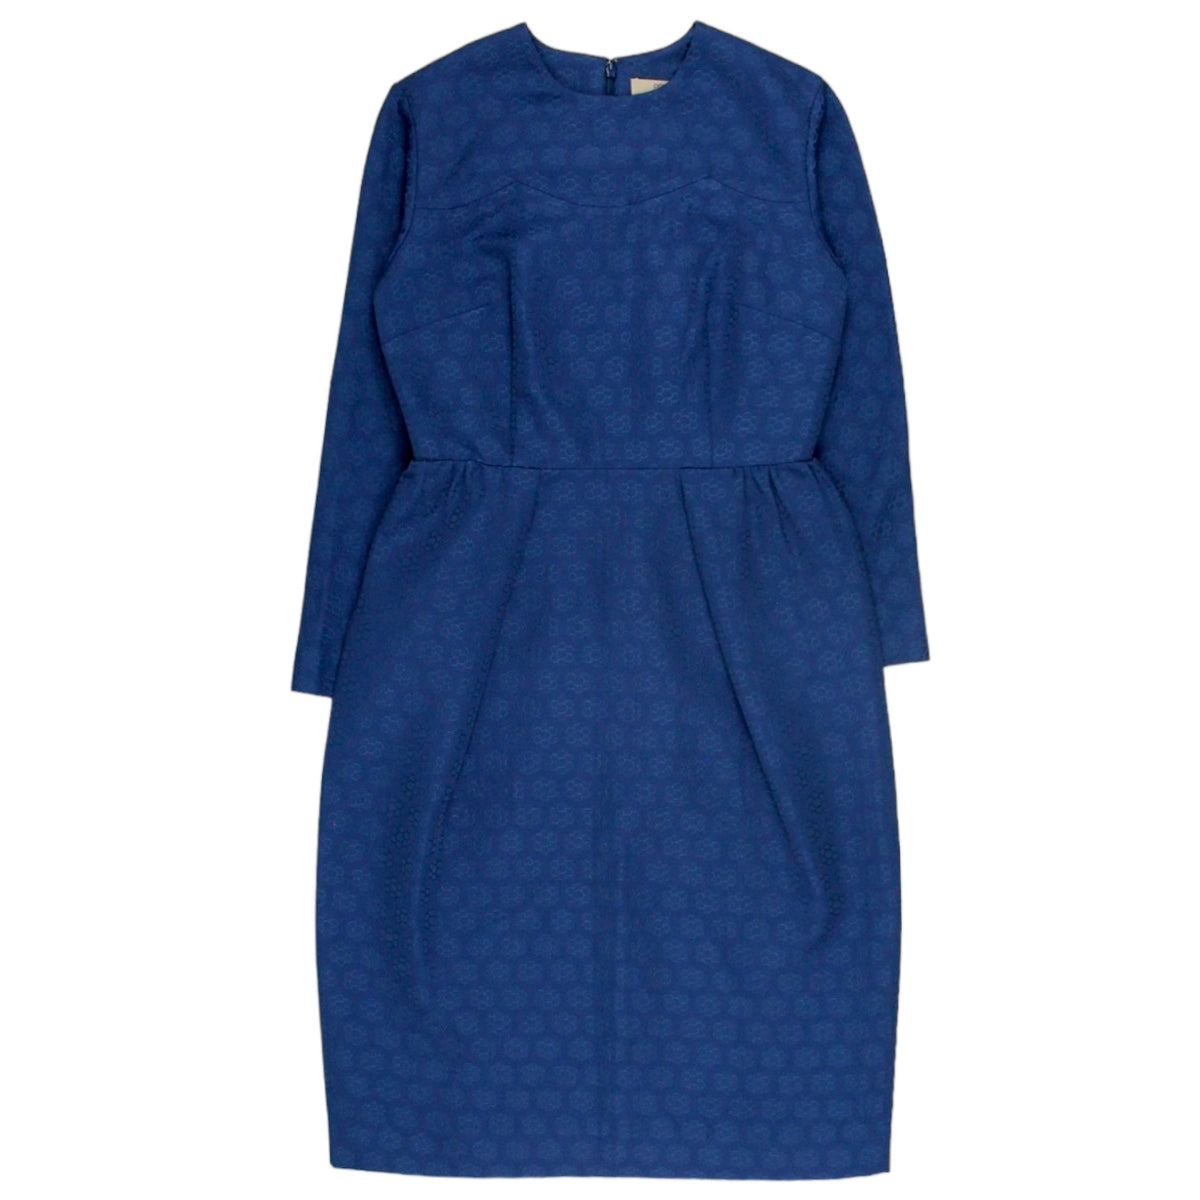 Orla Kiely Blue Textured Daisy Jacquard Dress